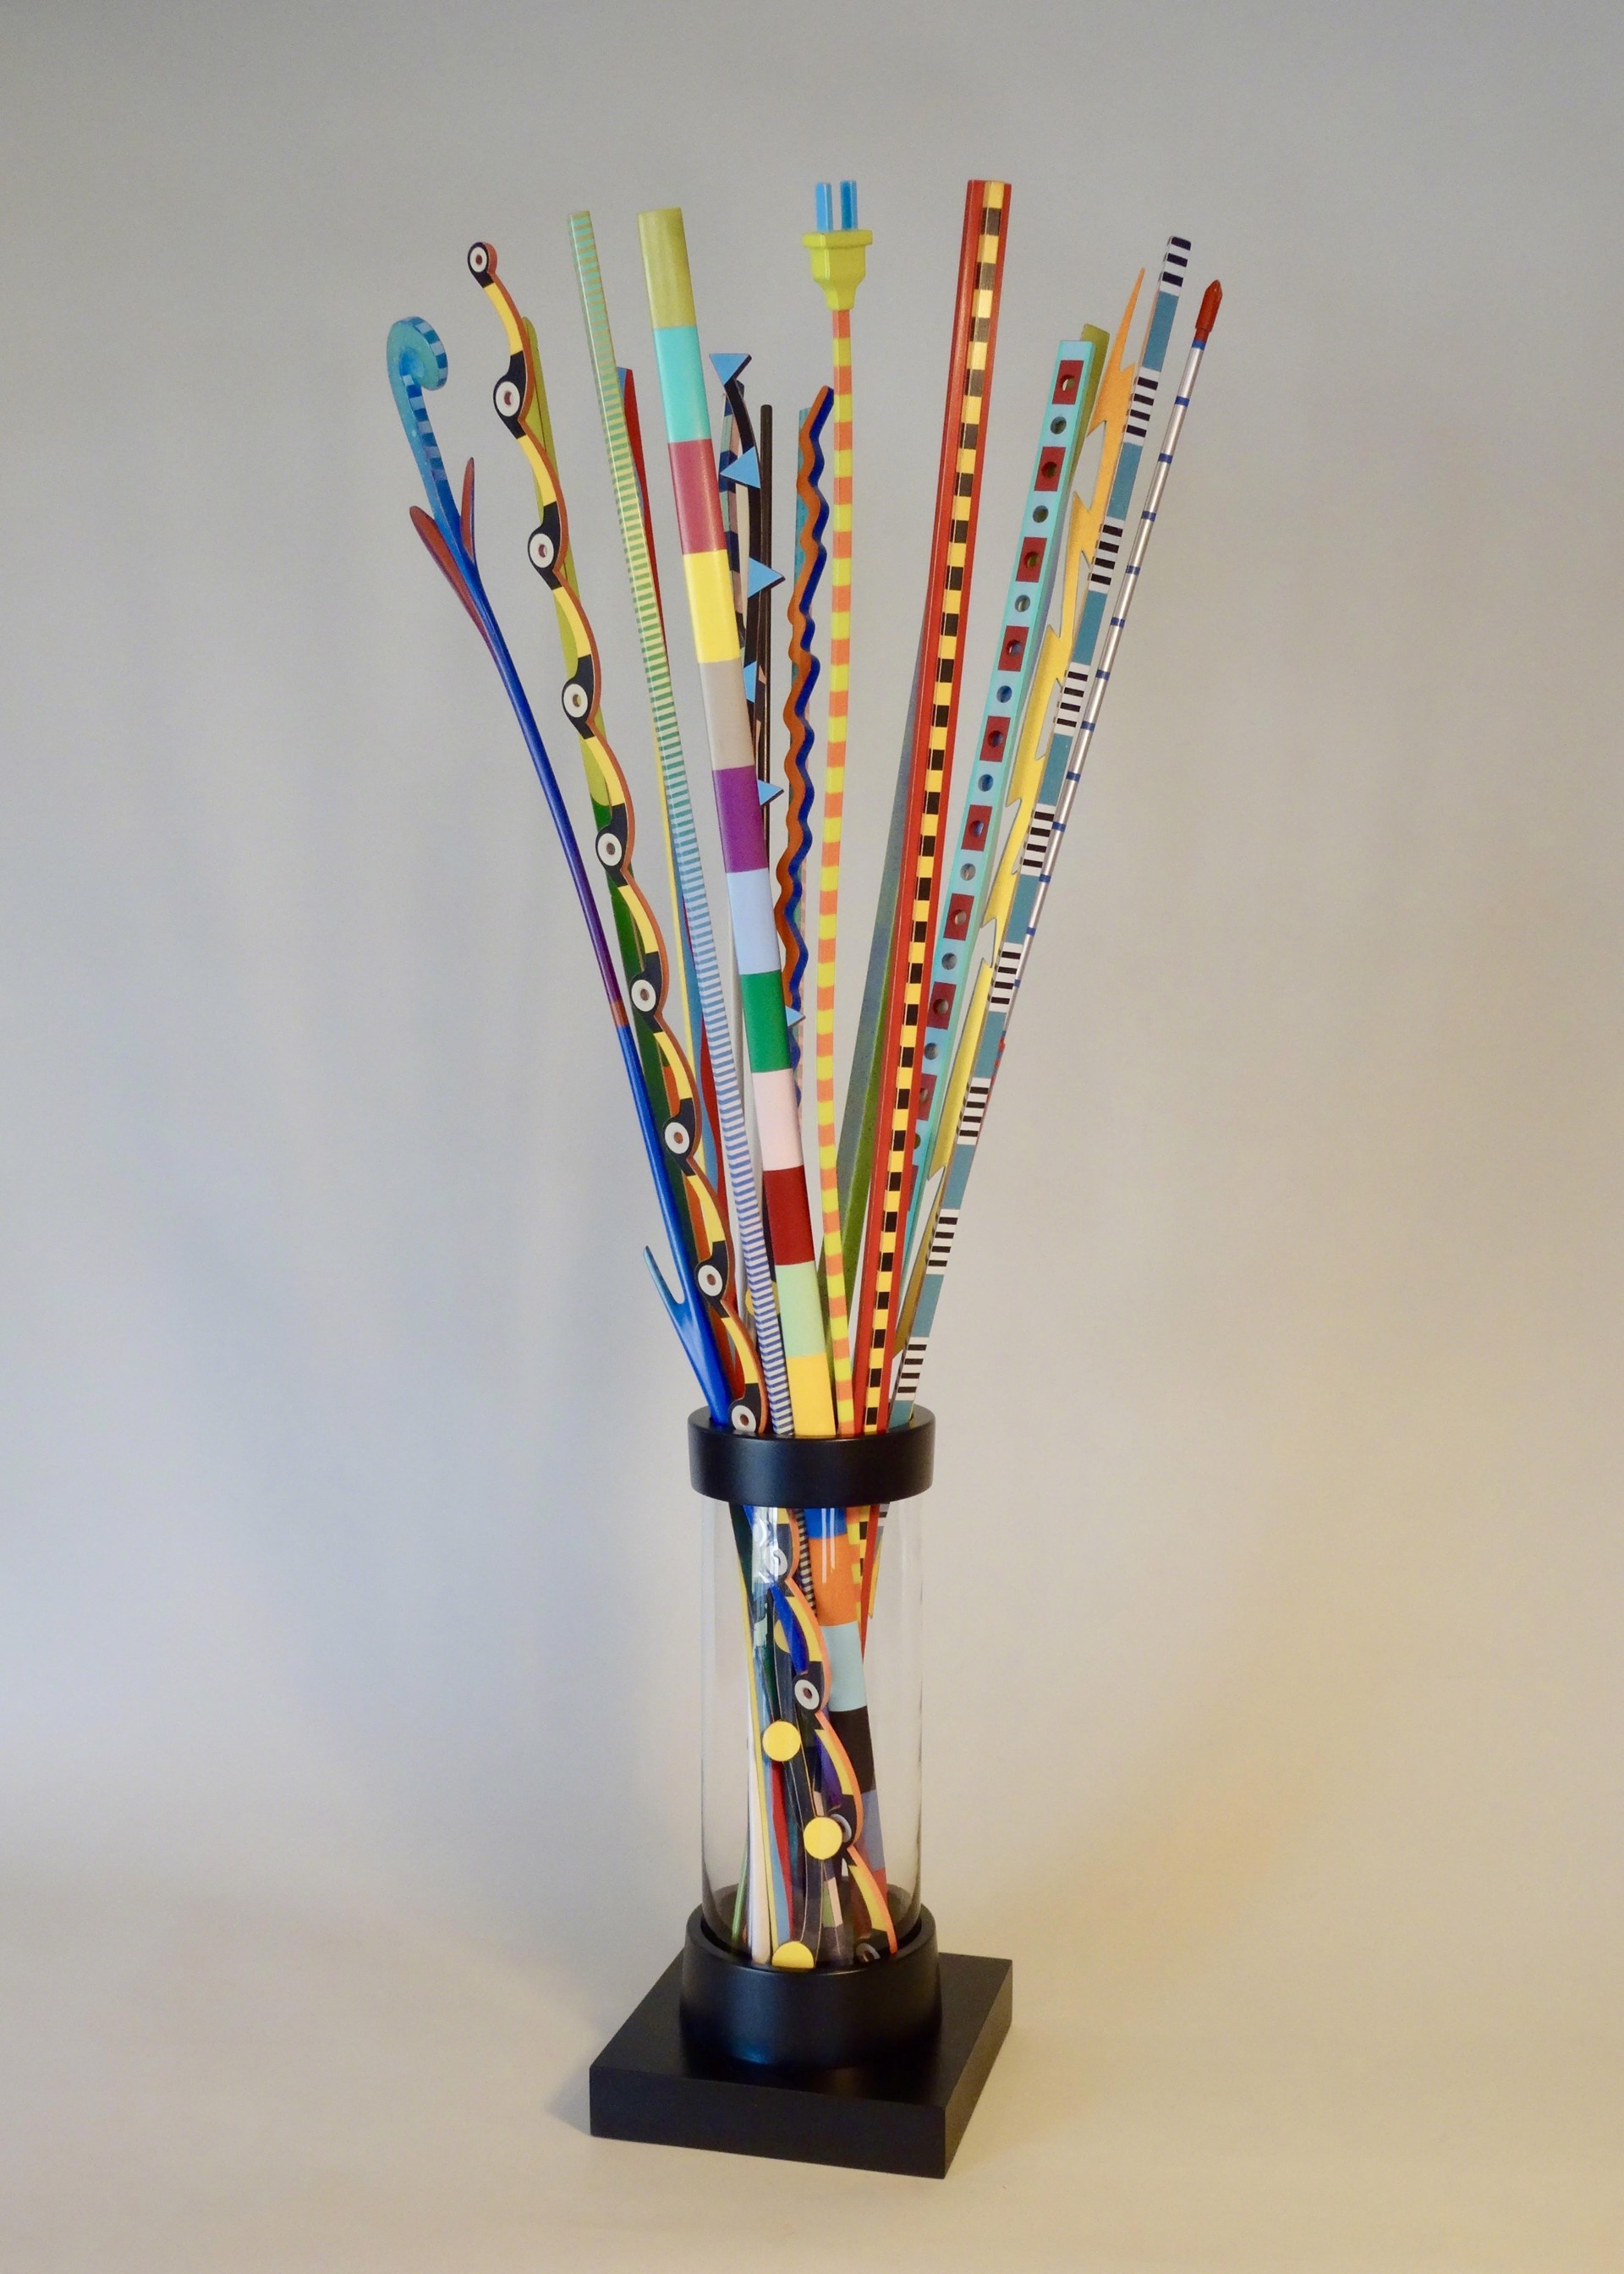 Vase of Colorful Sticks (LARGE) by Sean O'Meallie